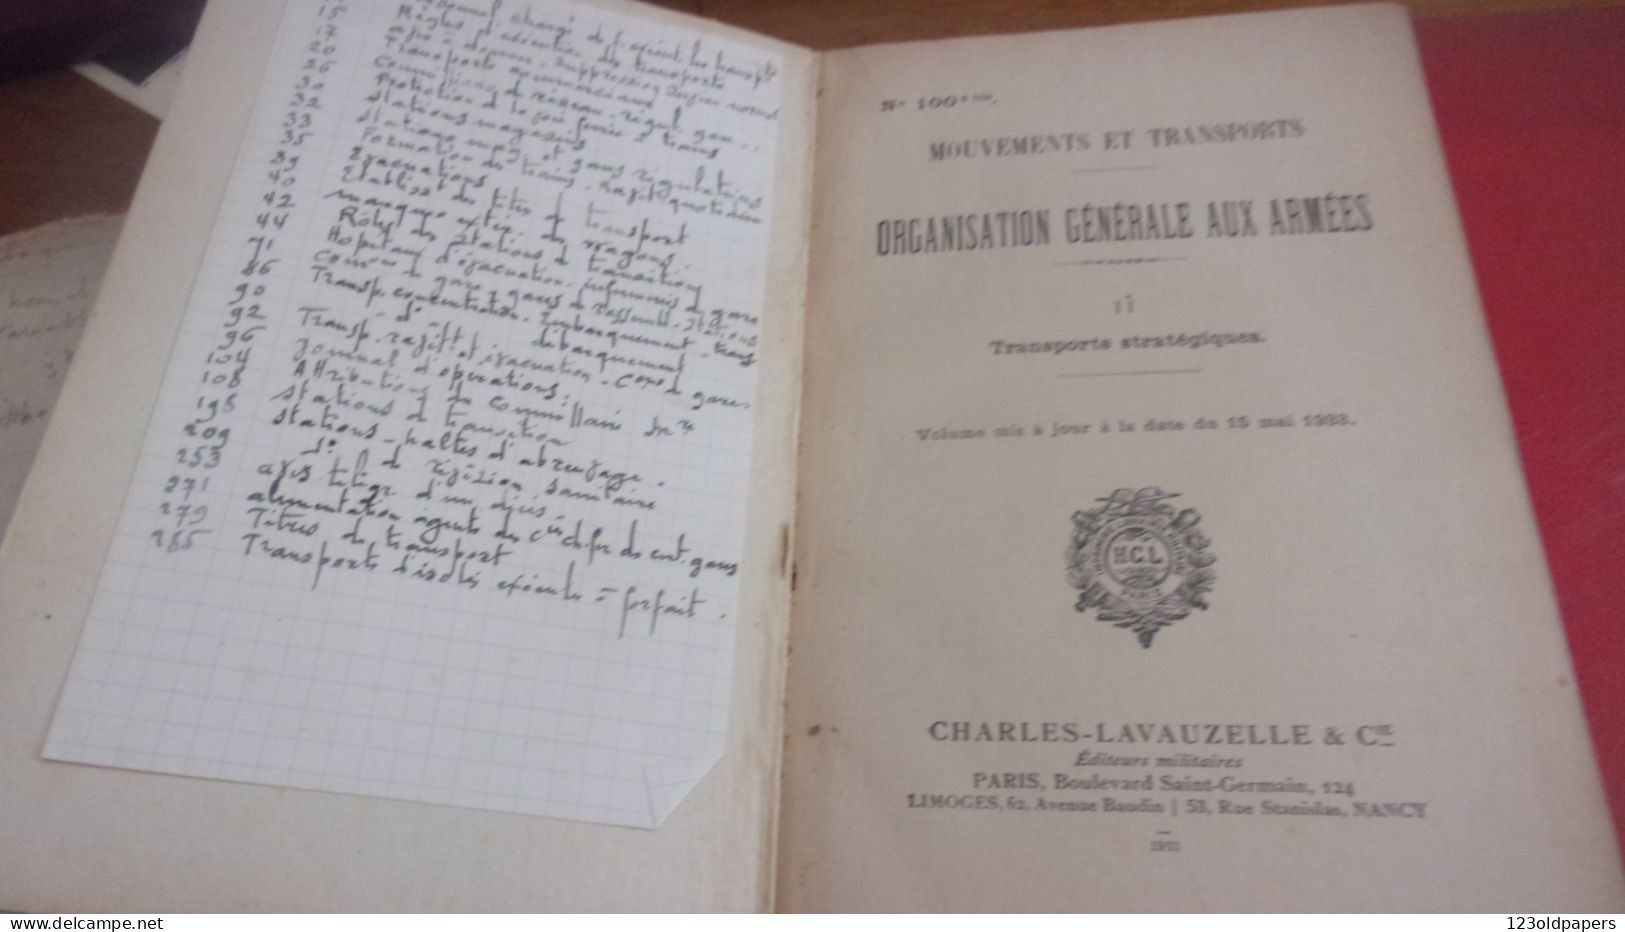 1934 LAVAUZELLE MOUVEMENTS TRANSPORTS ORGANISATION GENERALE AUX ARMEES TRANSPORT STRATEGIQUE - French